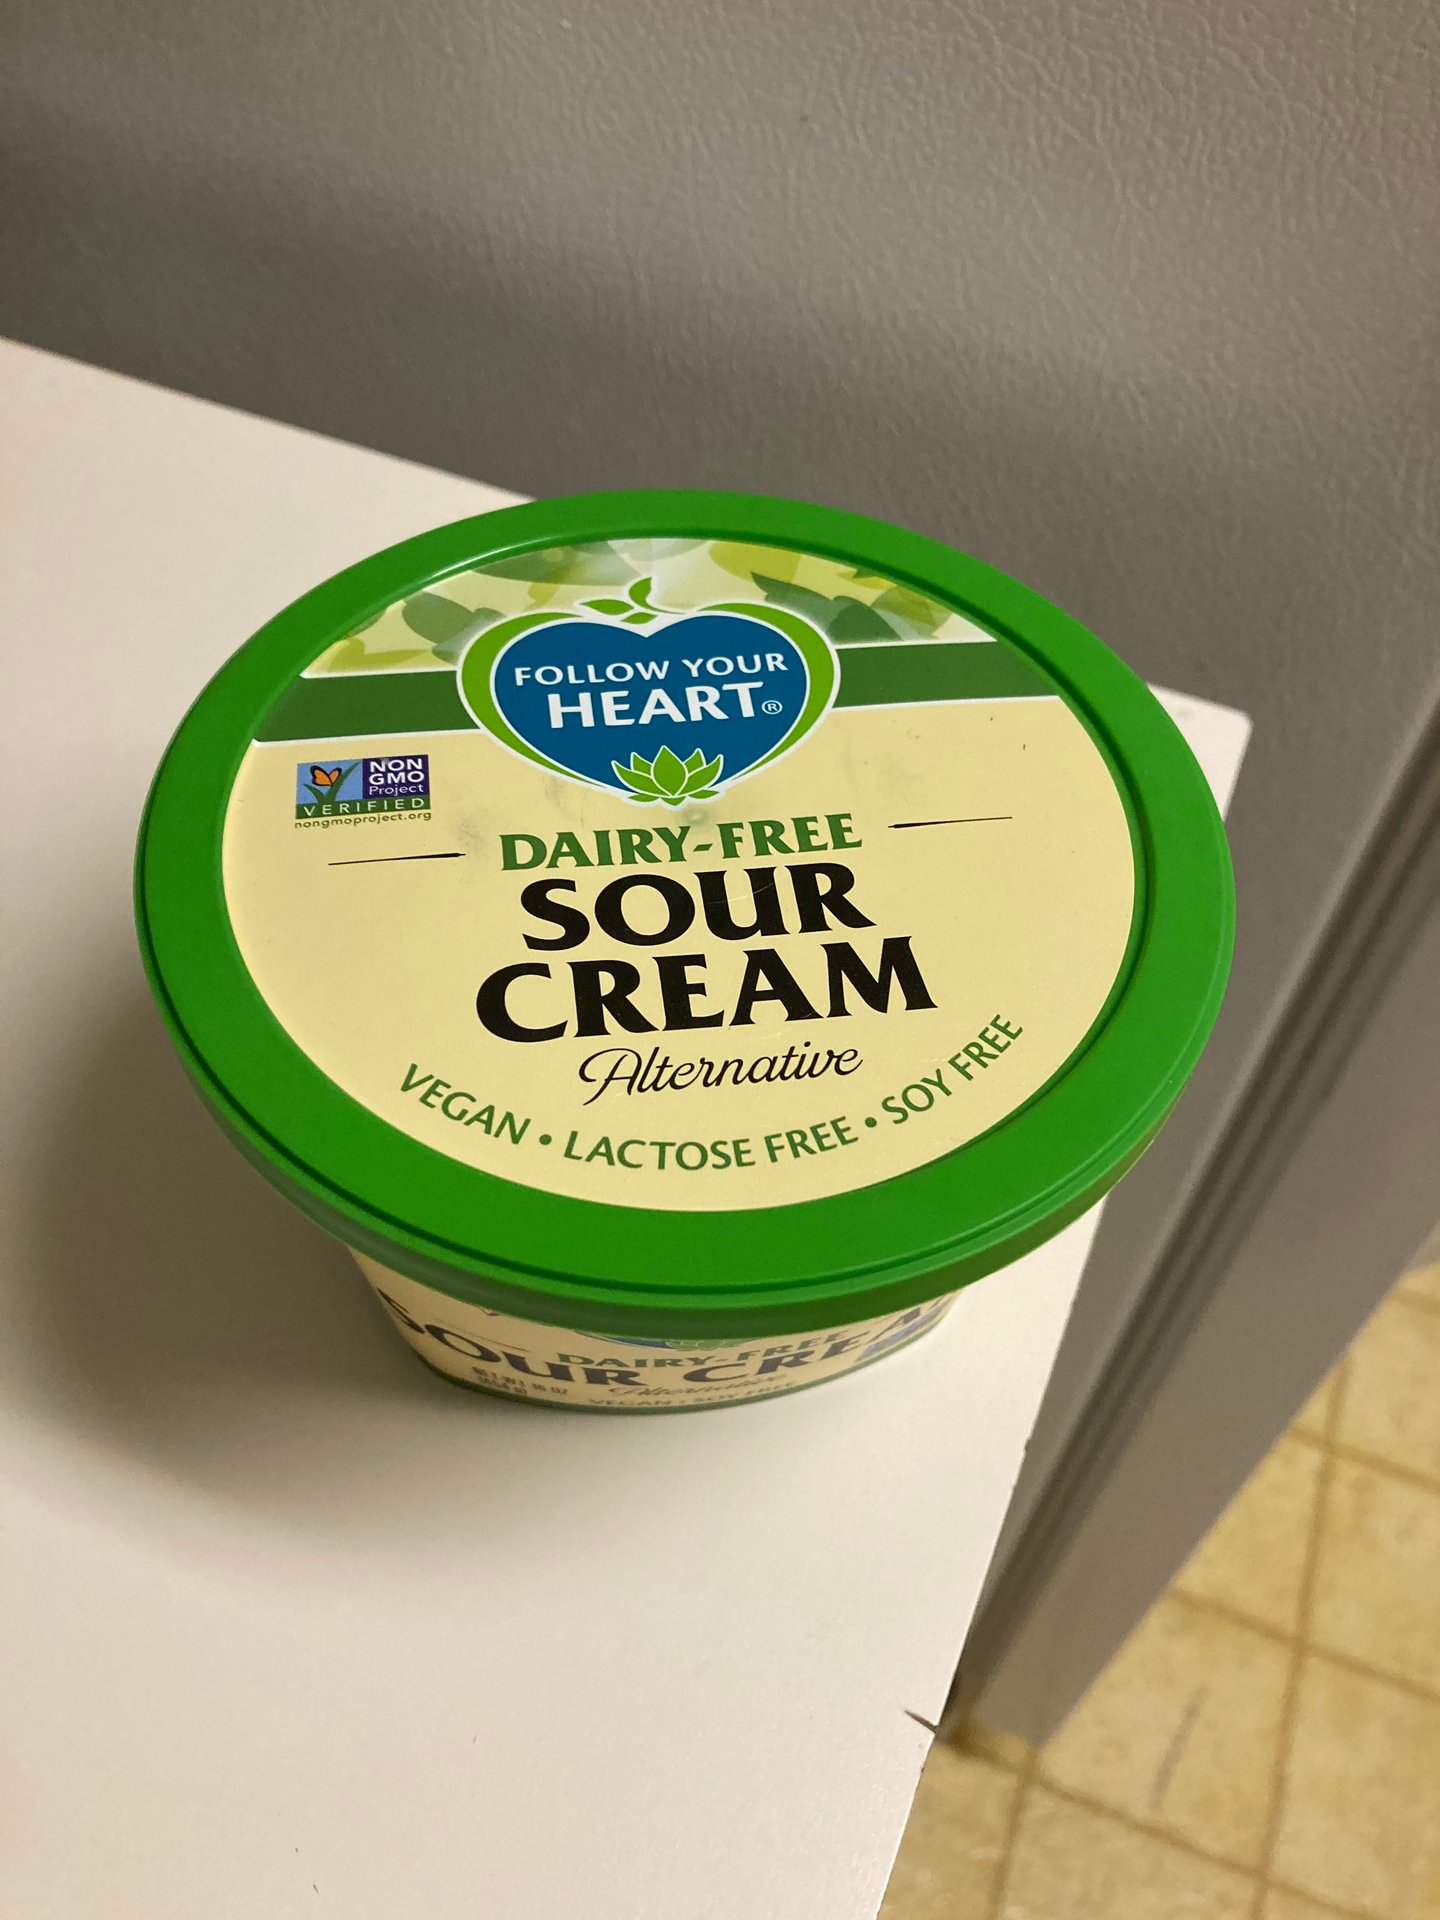 Follow Your Heart Dairy Free Sour Cream 4-32 oz